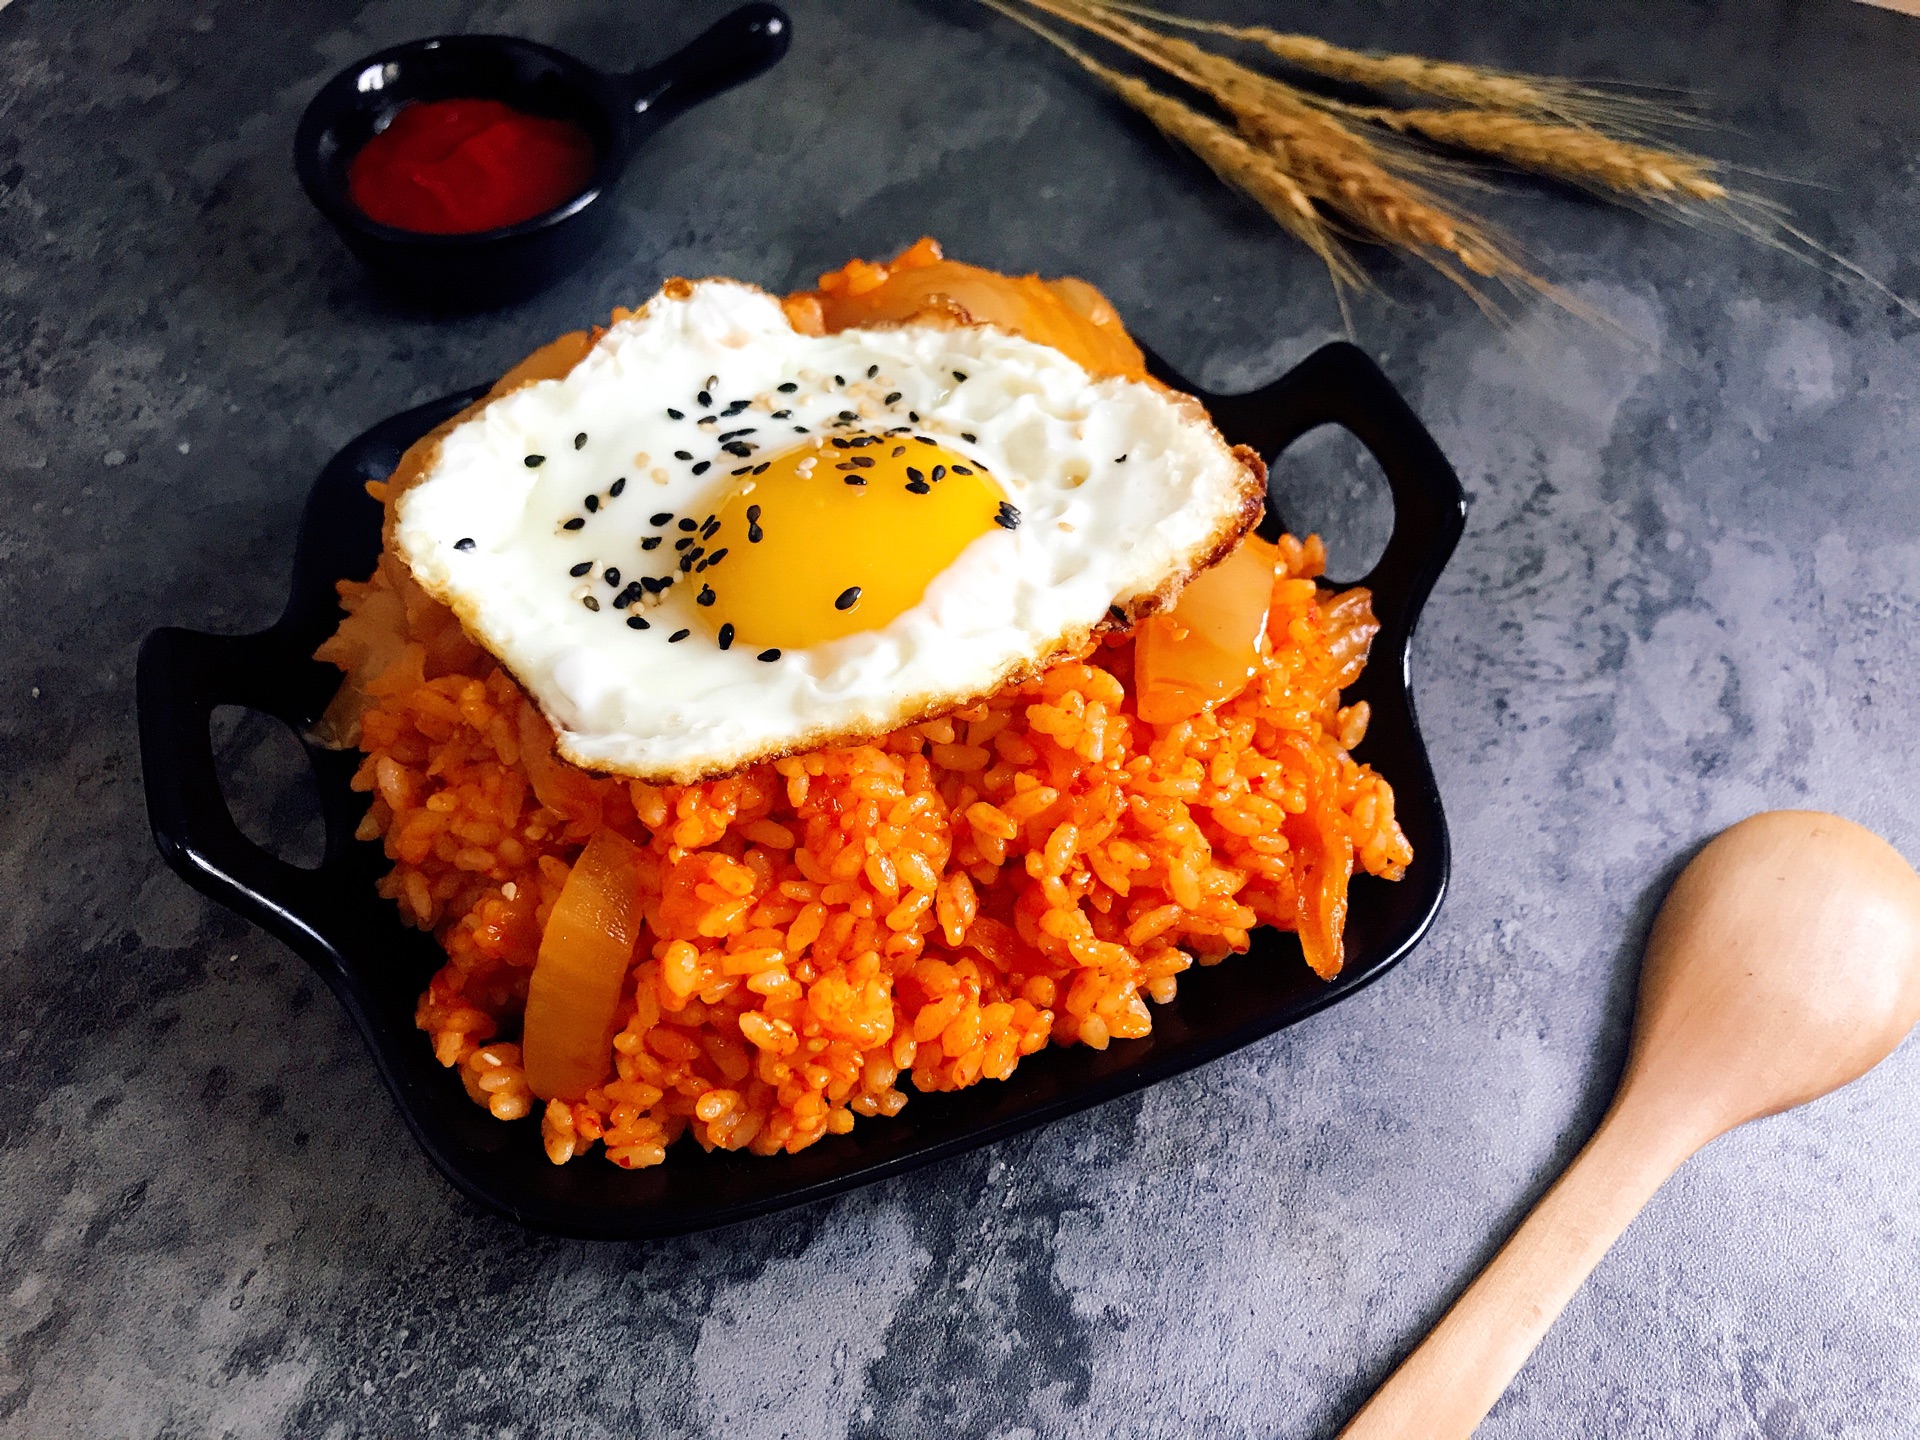 韩式泡菜炒饭／Korean Kimchi Fried Rice | PenguinOlivia